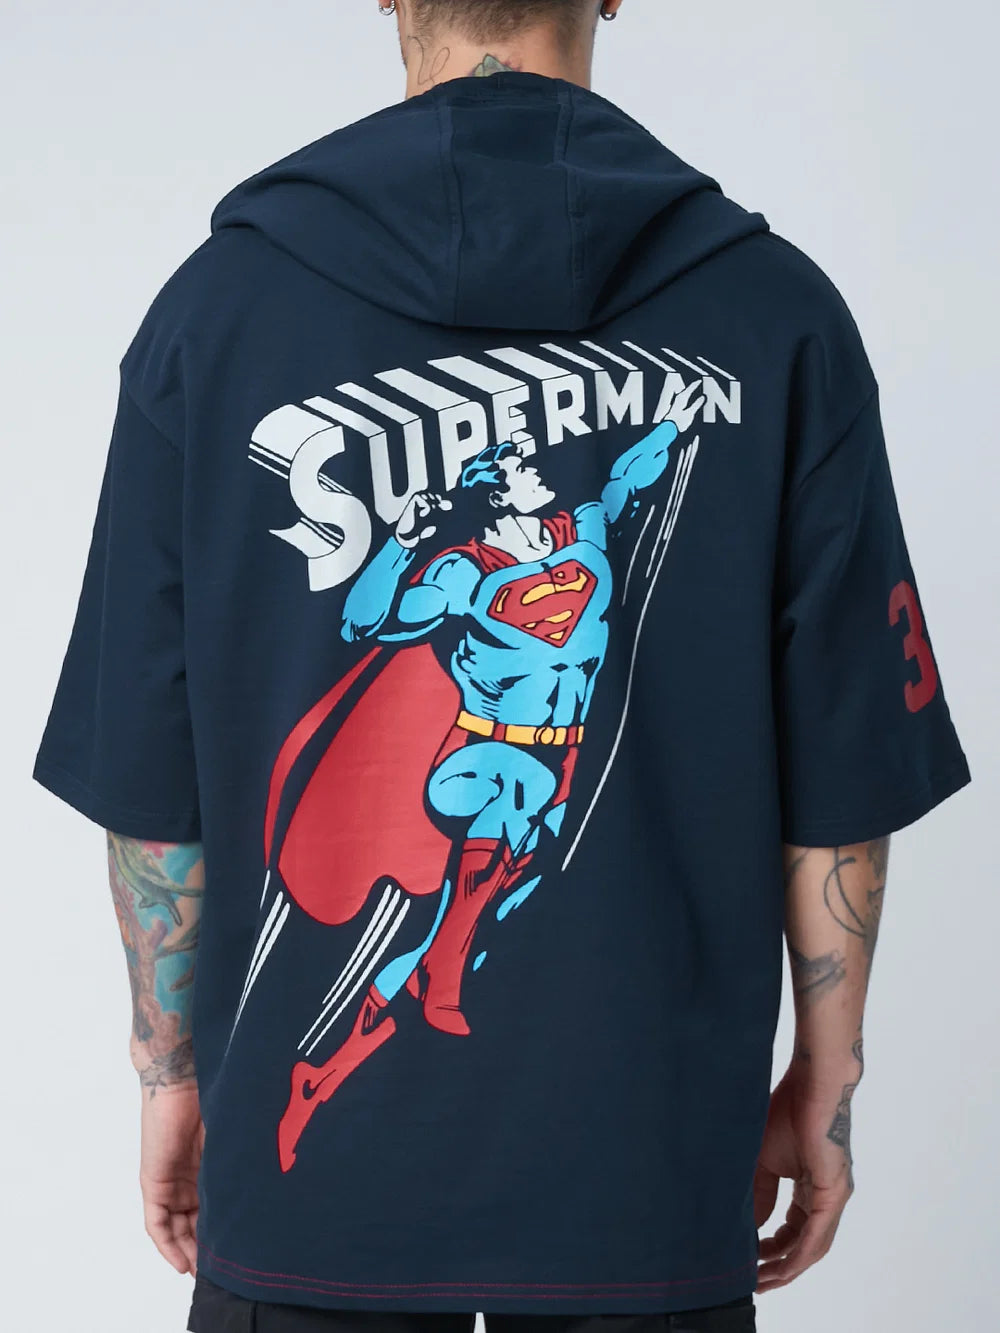 Superman Son of Krypton (UK version)